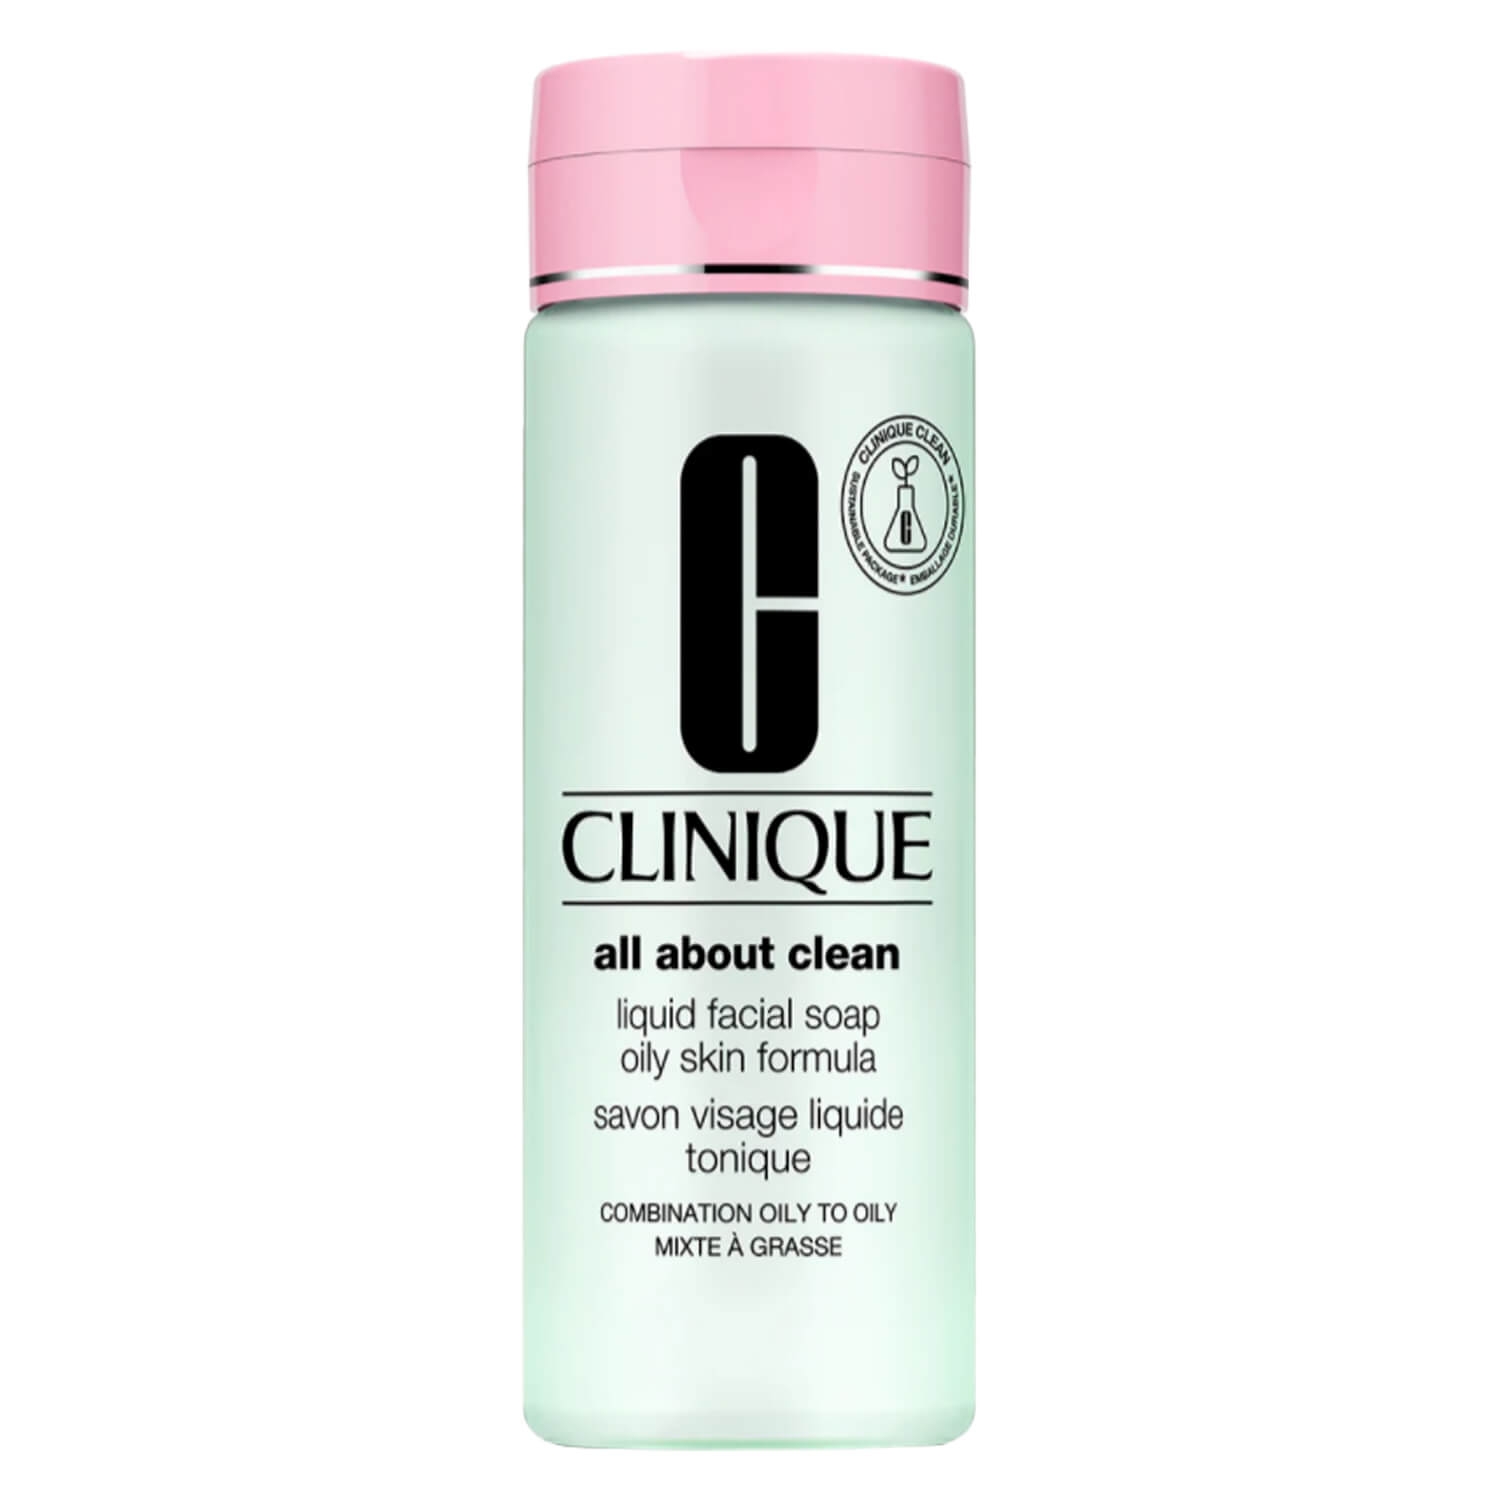 Produktbild von All About Clean - Liquid Facial Soap Oily Skin